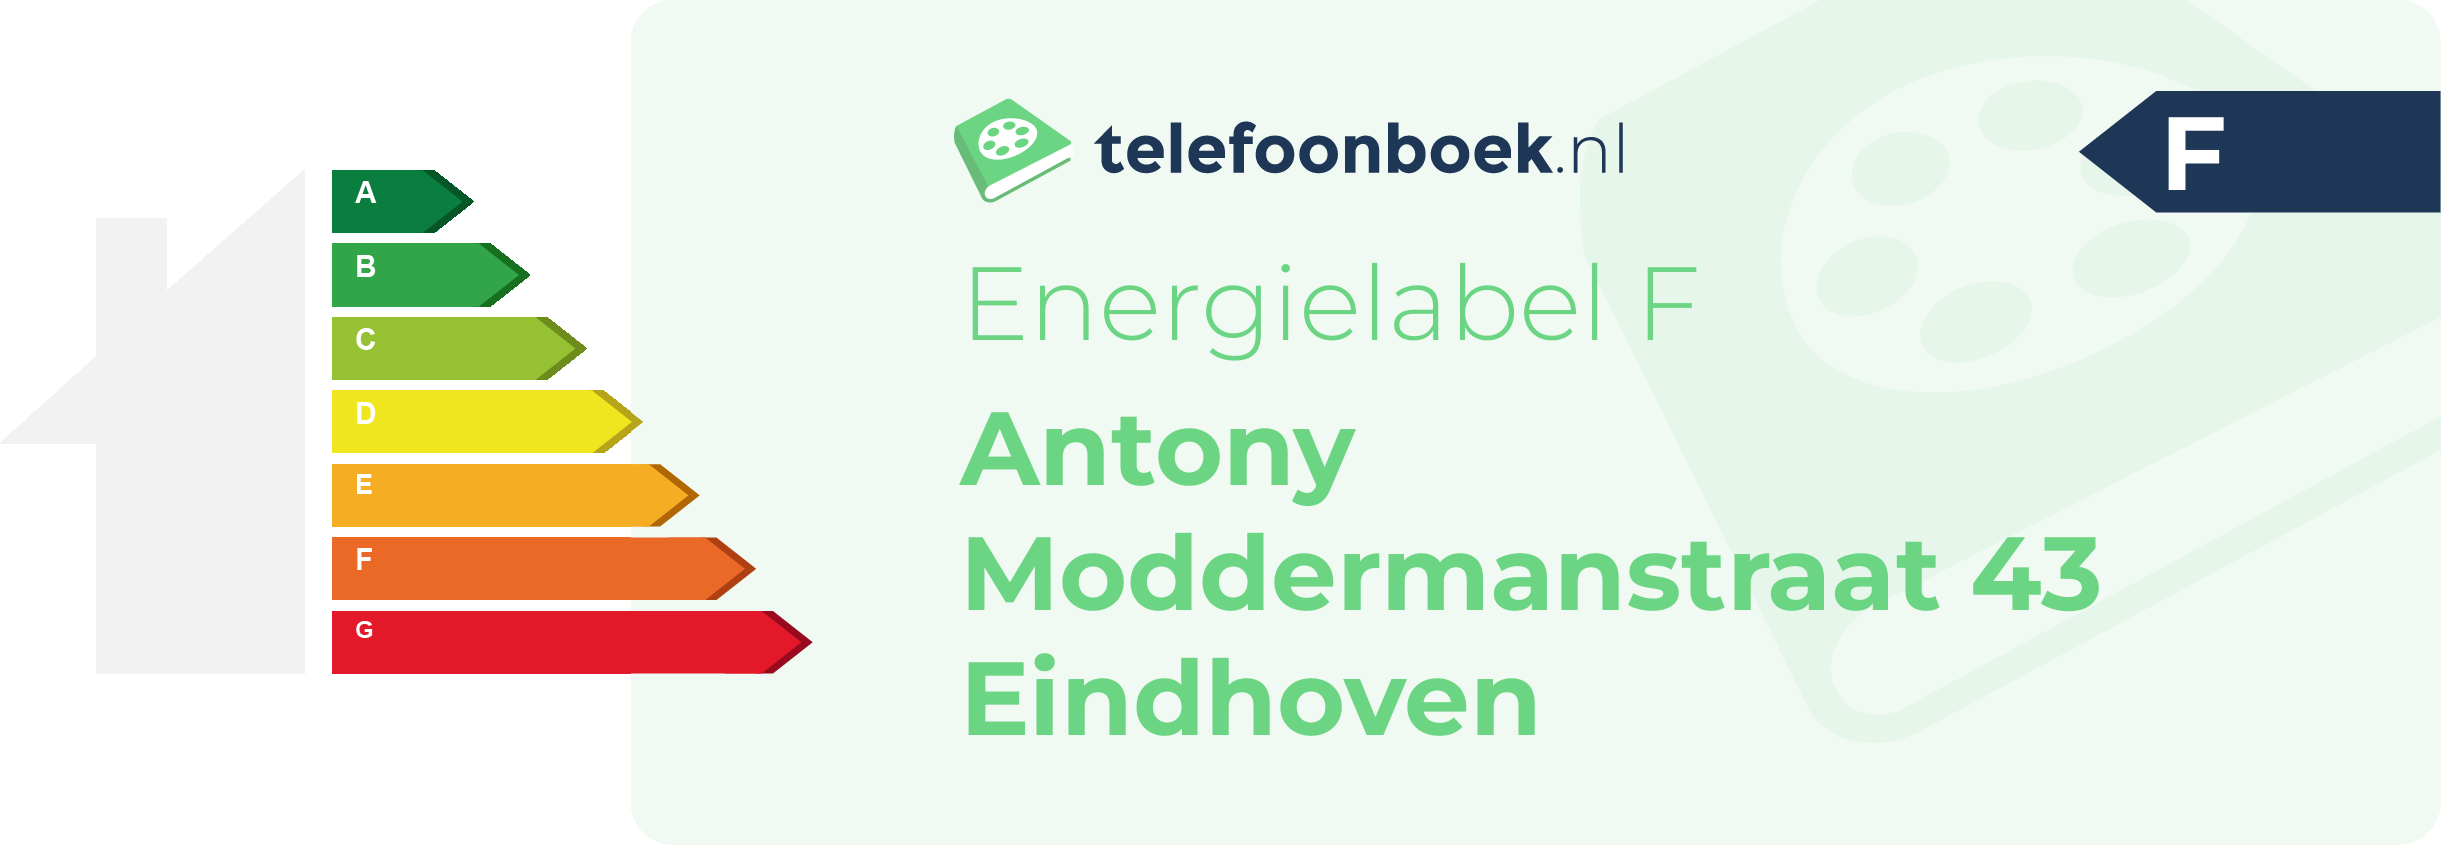 Energielabel Antony Moddermanstraat 43 Eindhoven